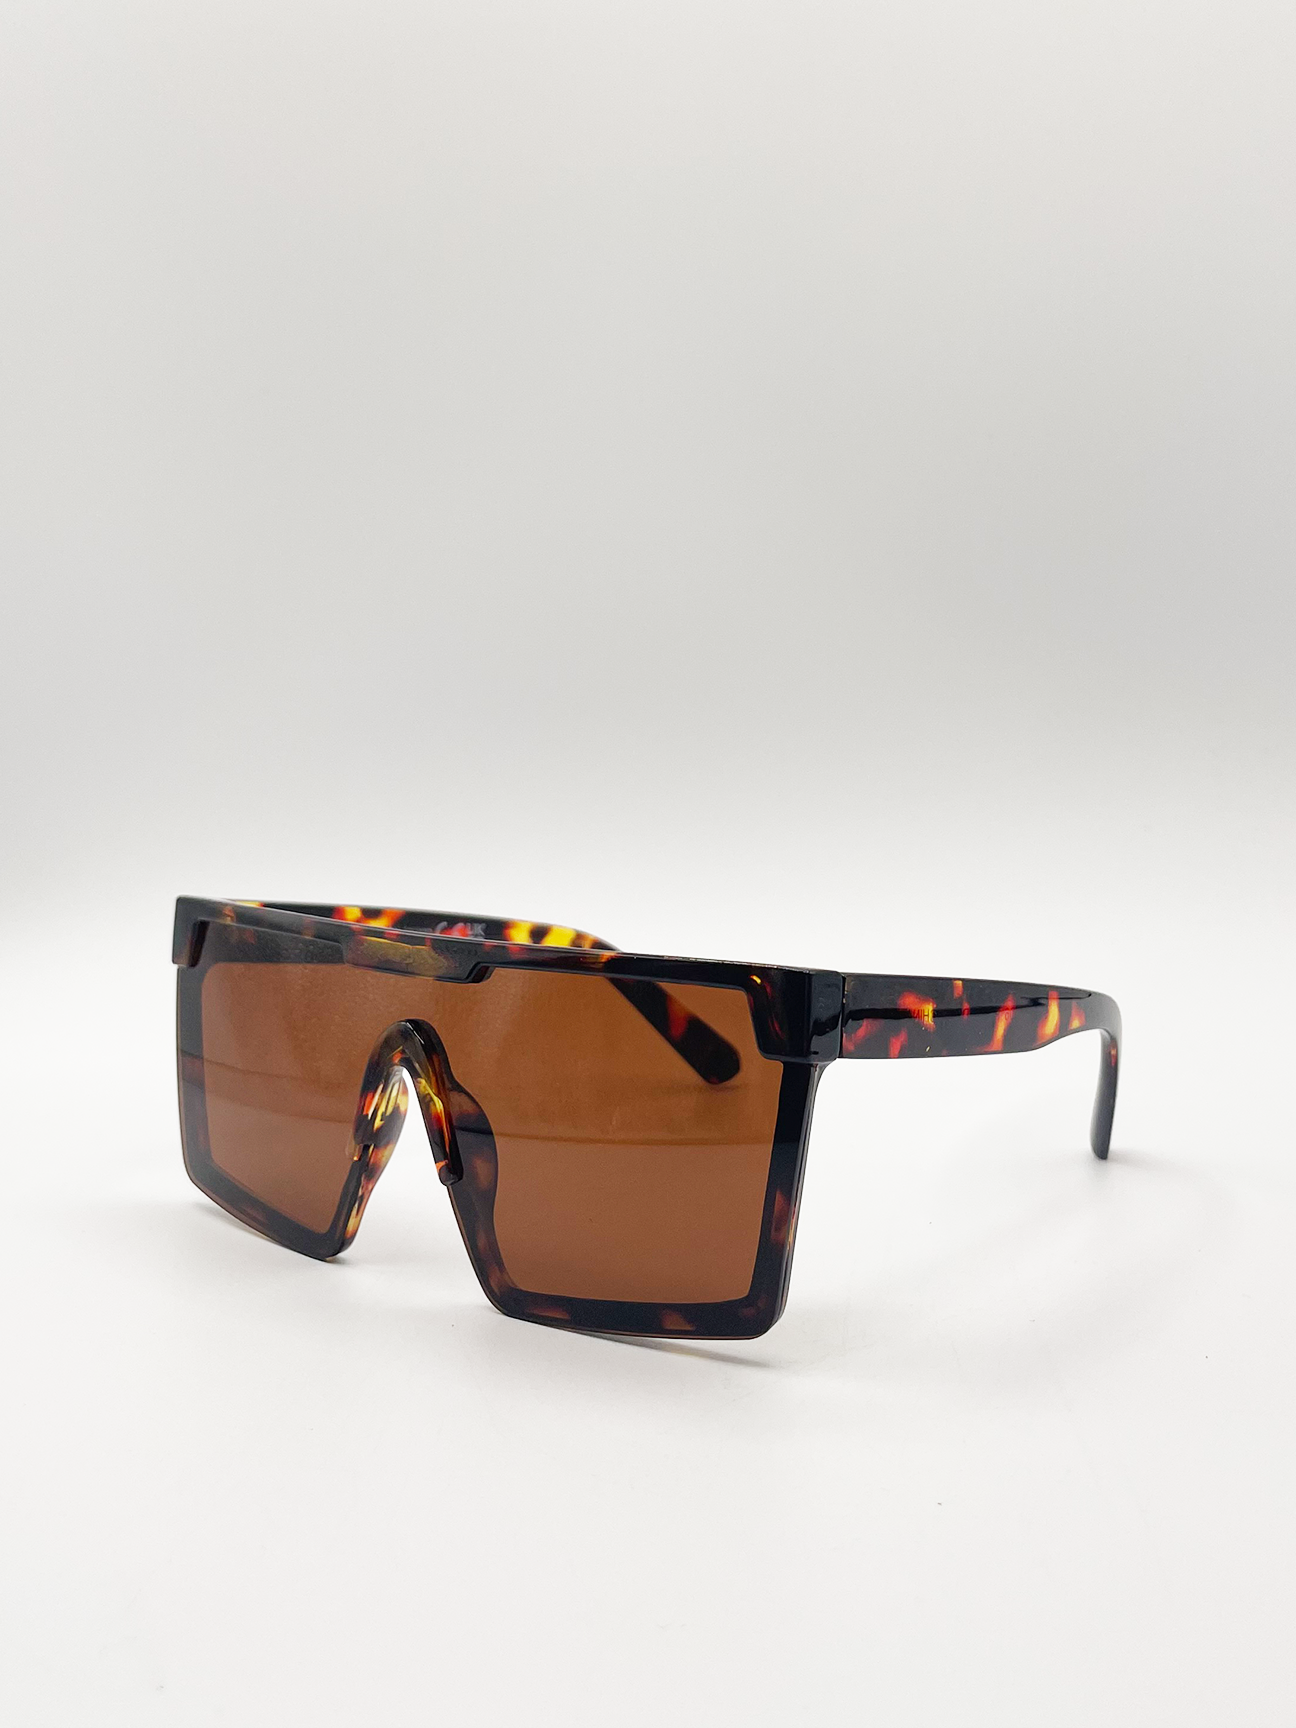 Tortoiseshell Oversized Flat Top Square Frame Sunglasses